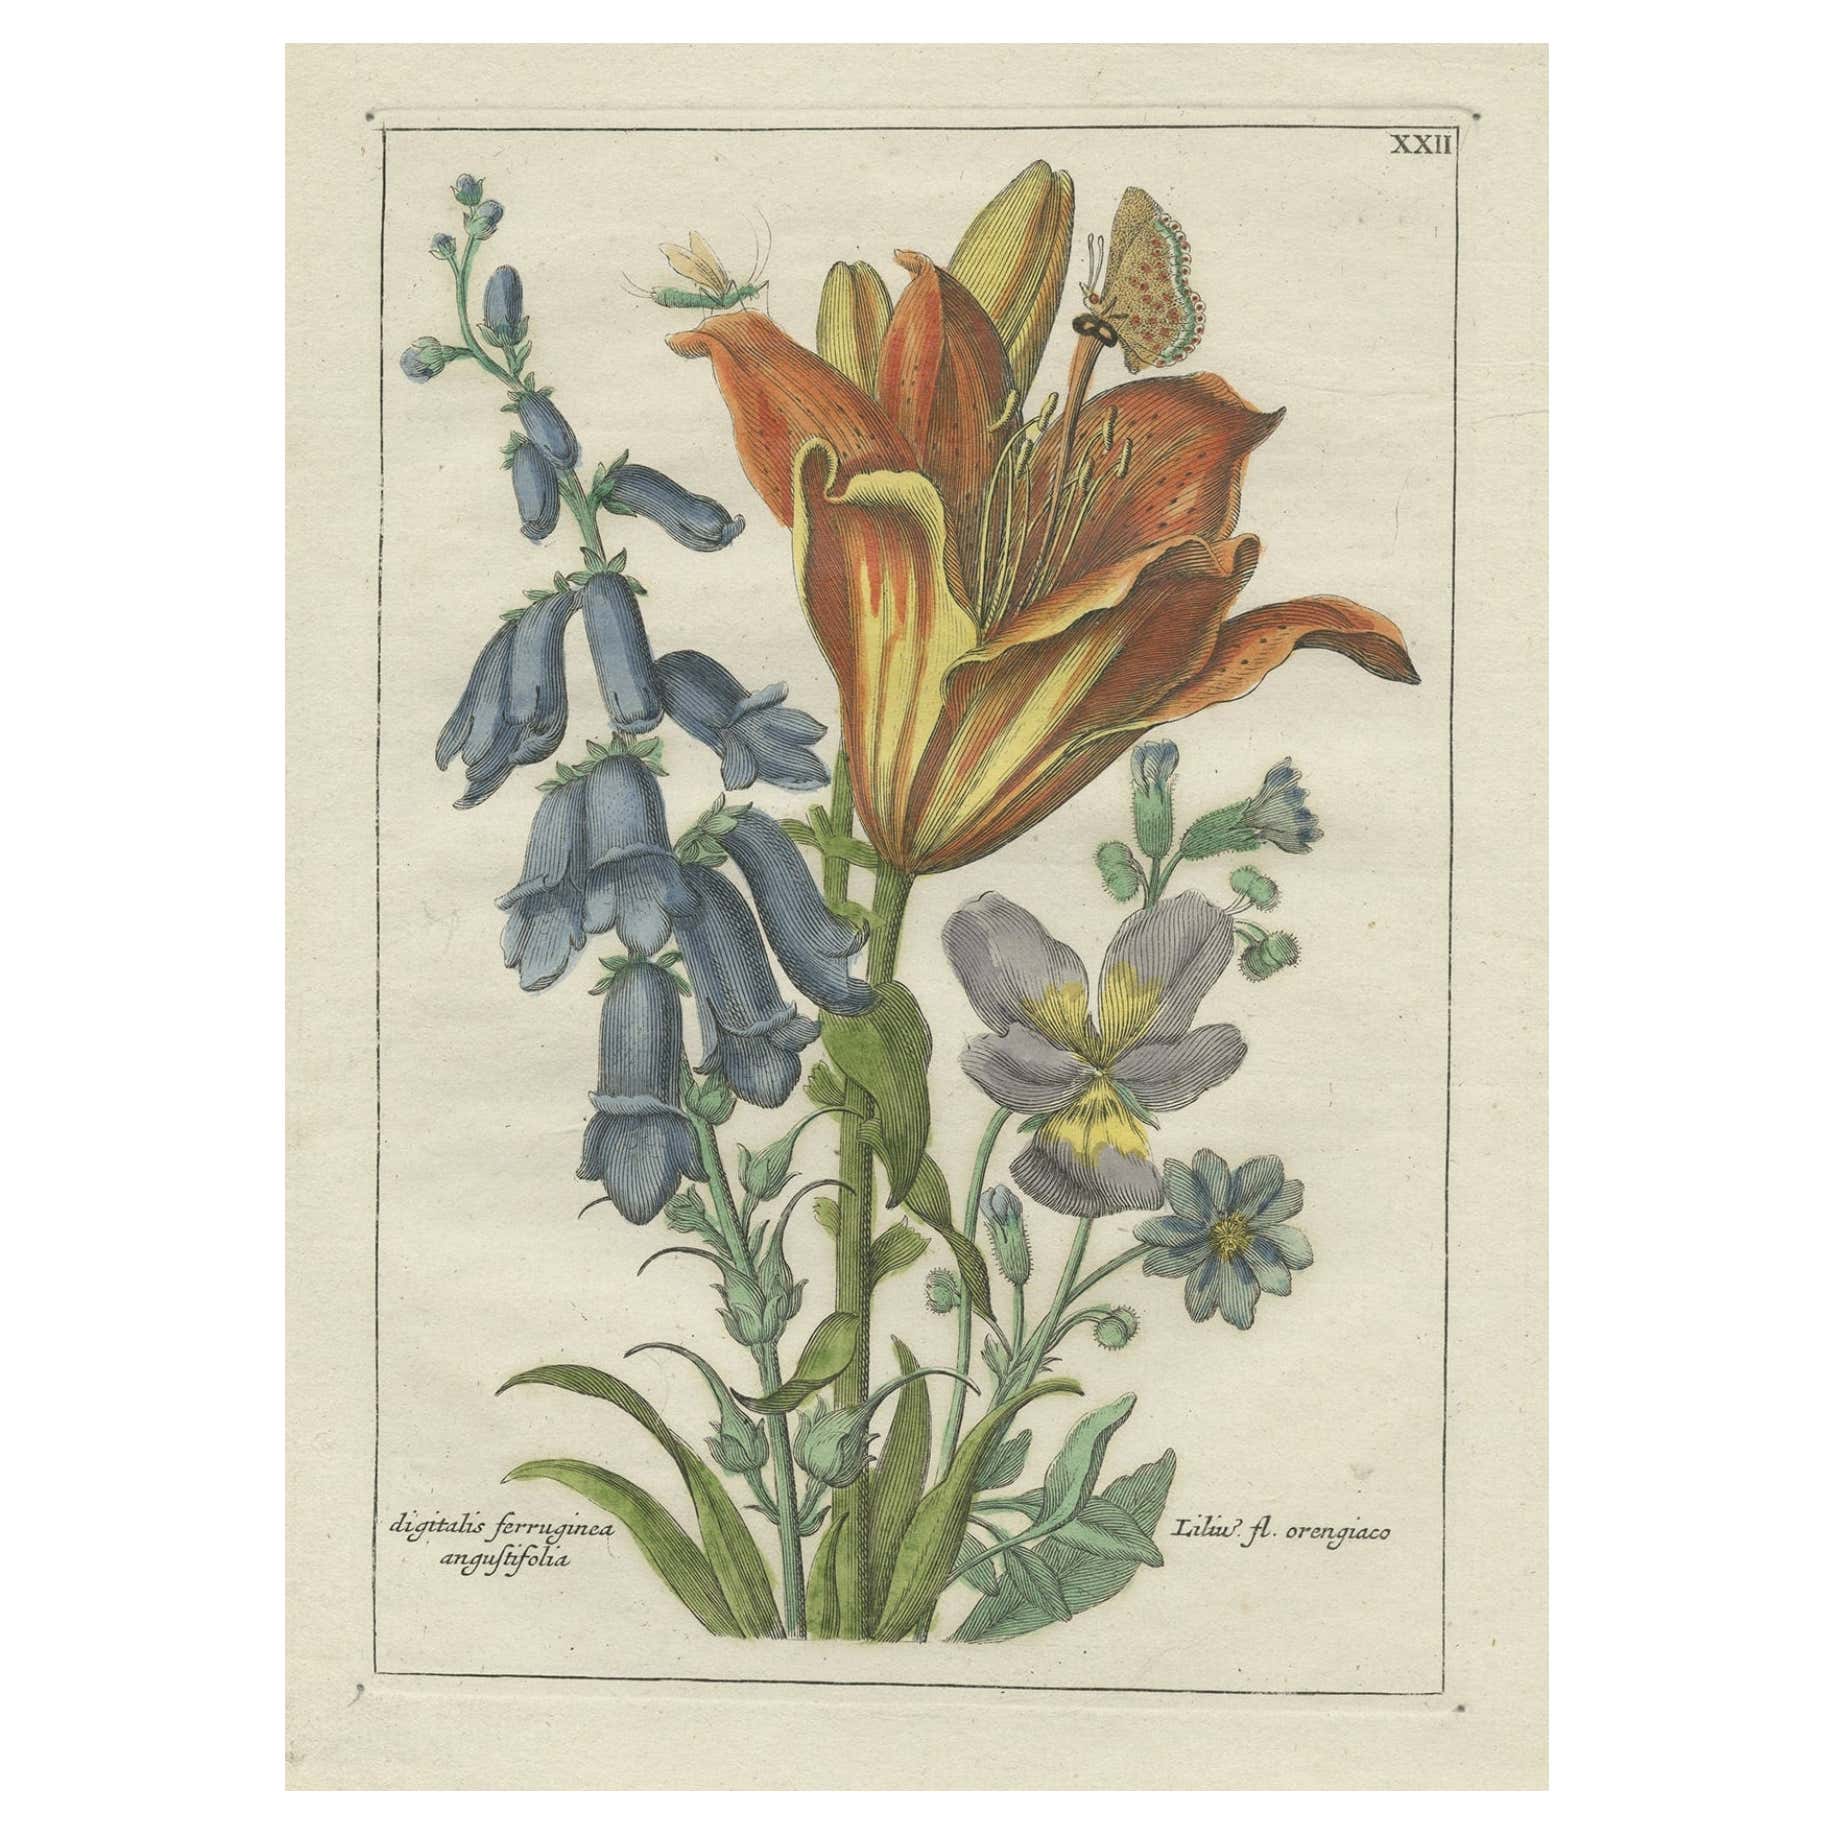 Old Botany Print of the Orange Lily & Digitalis Ferruginea Angustifolia, 1794